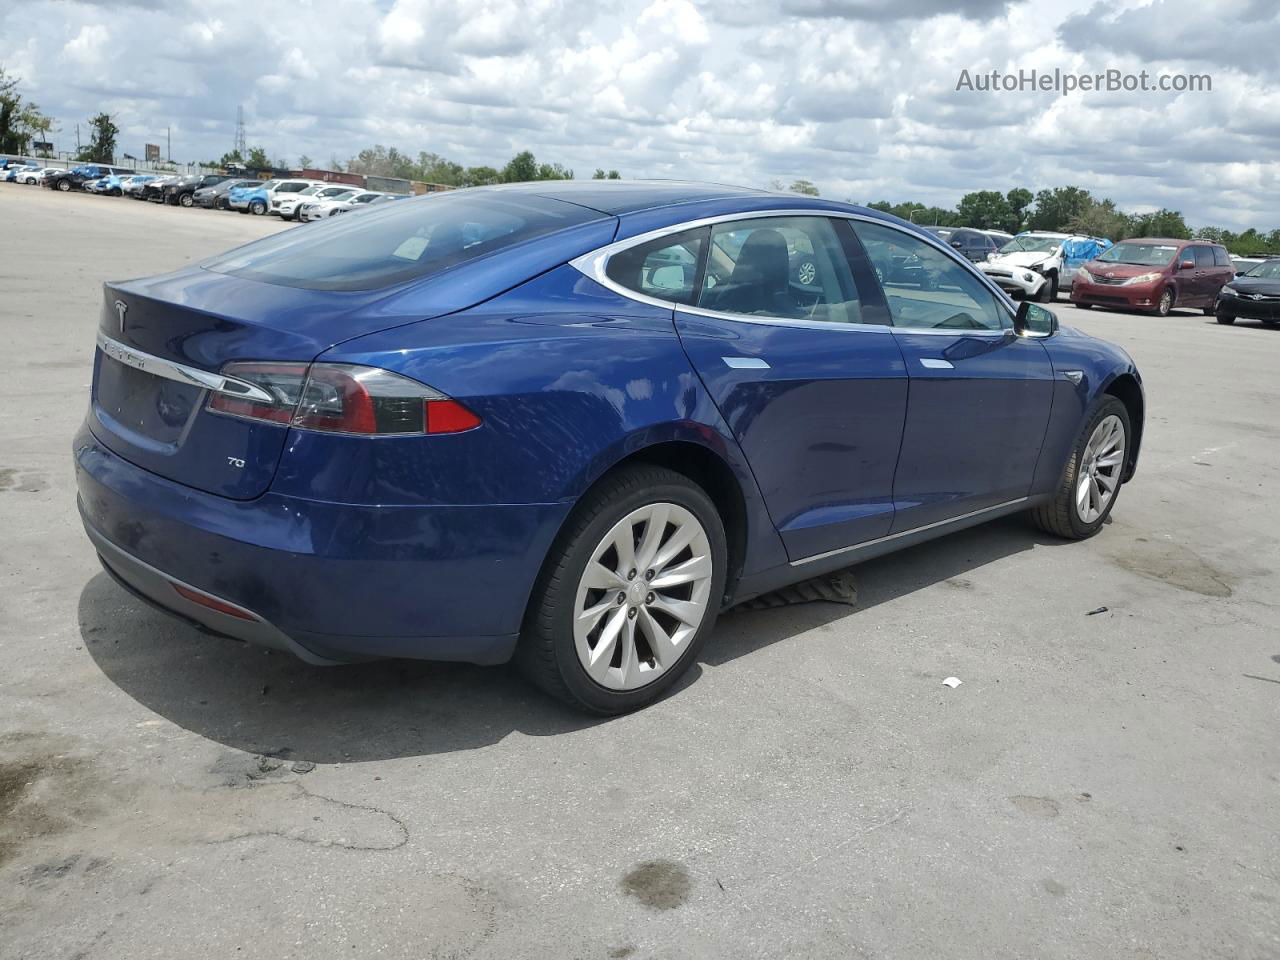 2016 Tesla Model S  Blue vin: 5YJSA1E16GF132897